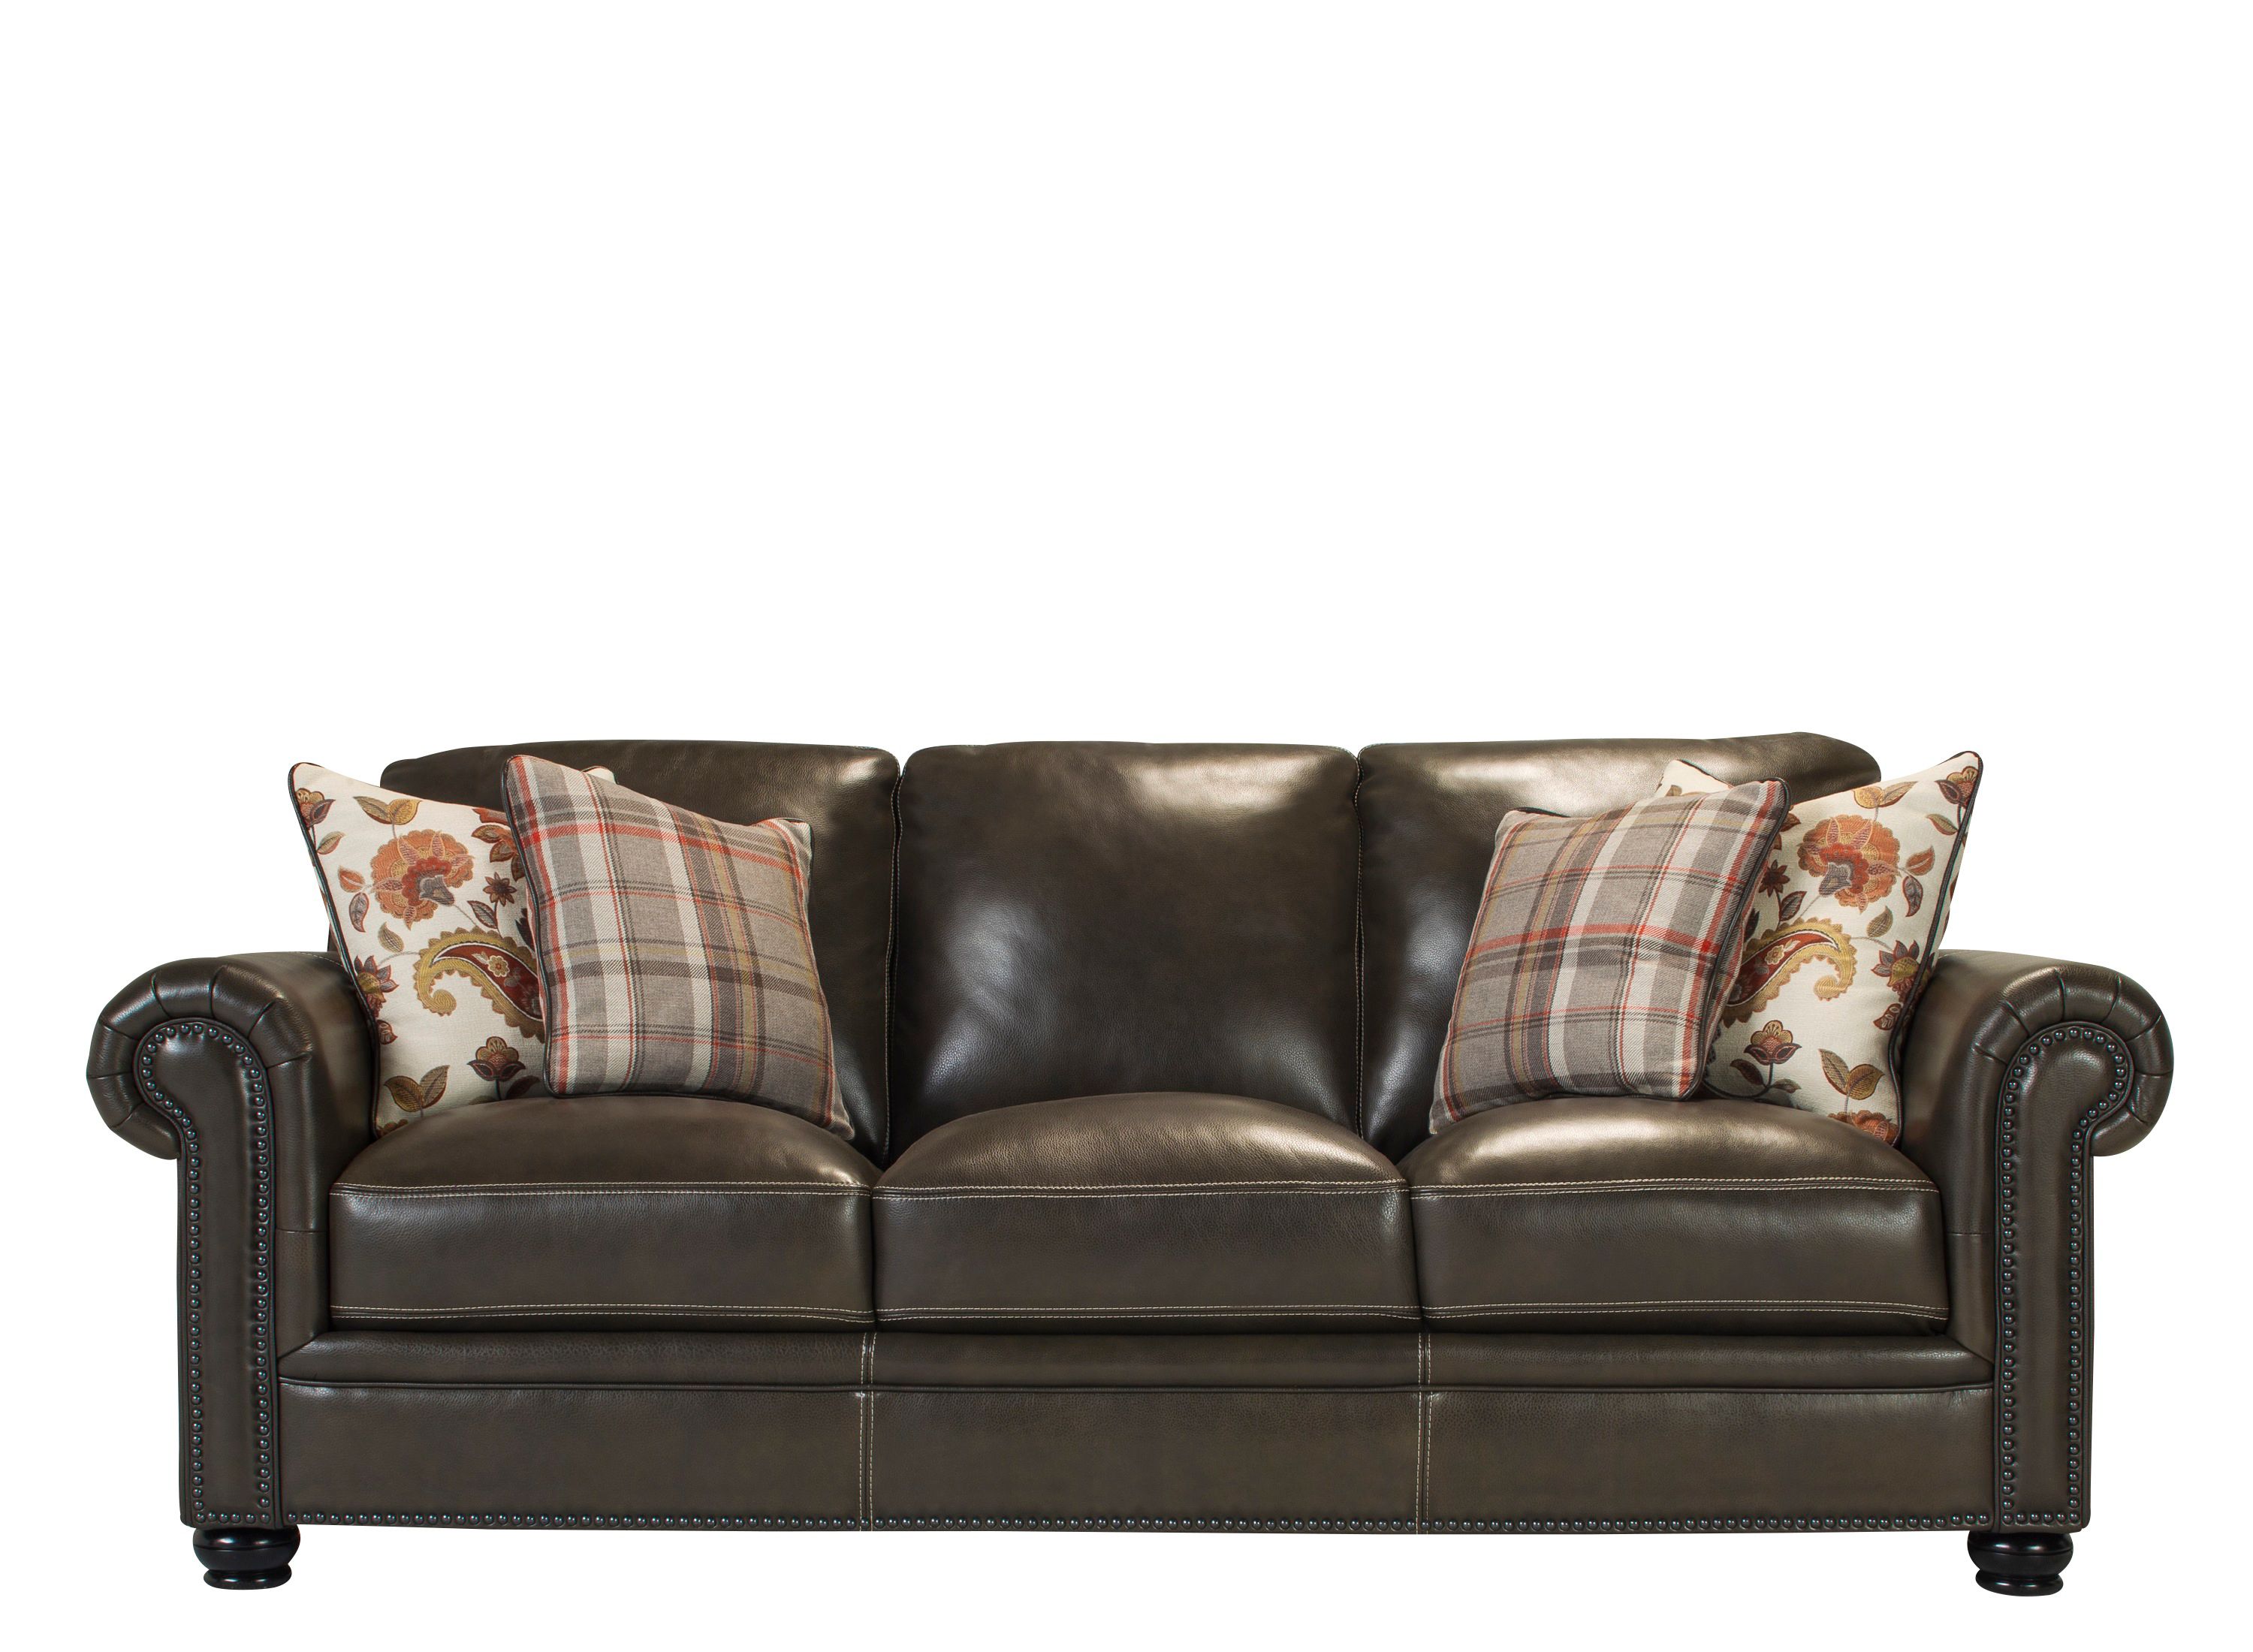 denley leather sofa reviews